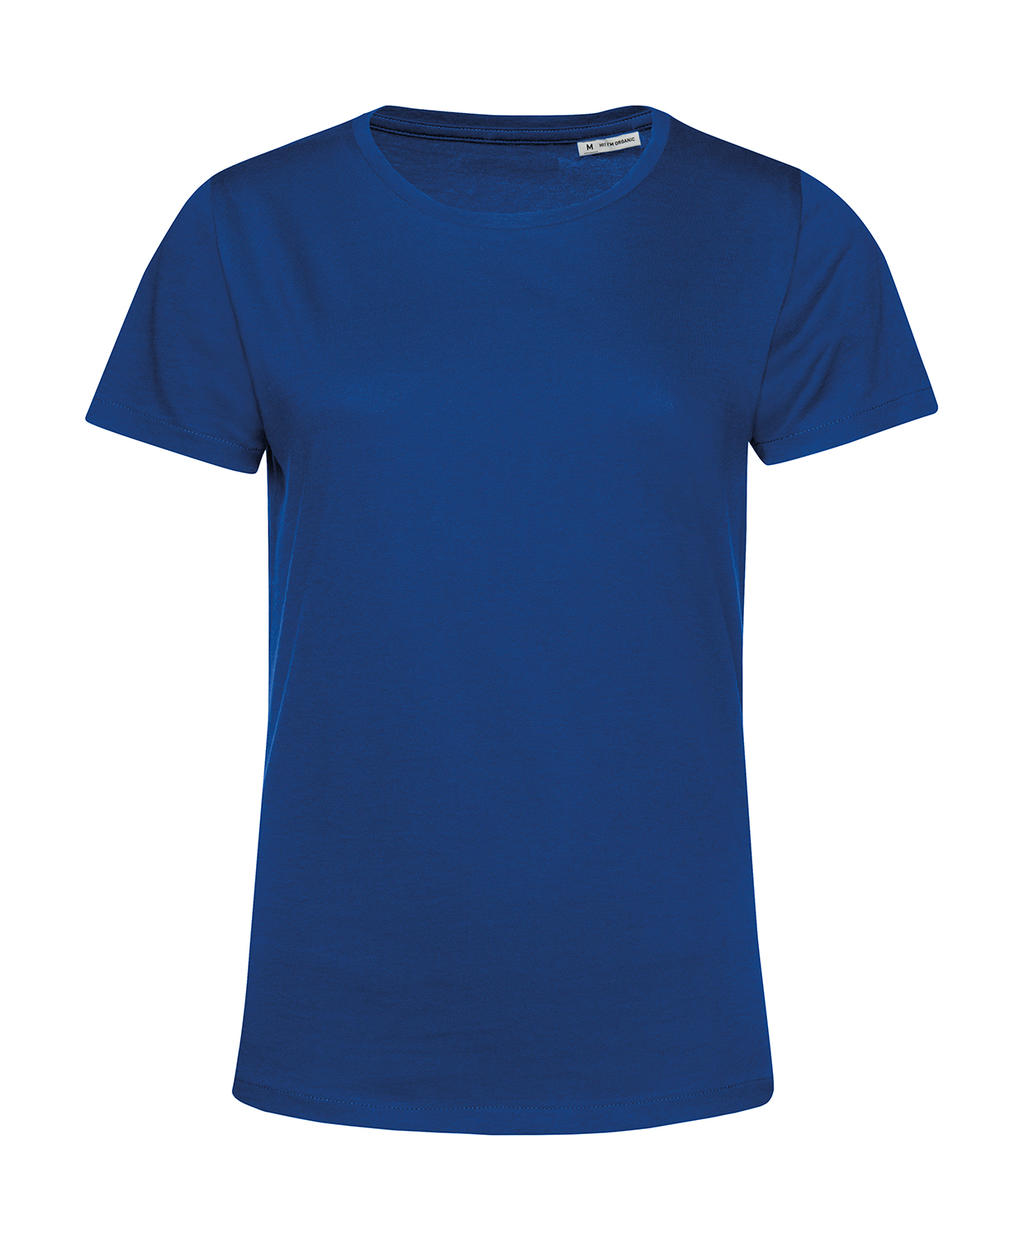 Tričko dámské BC Organic Inspire E150 - modré, L